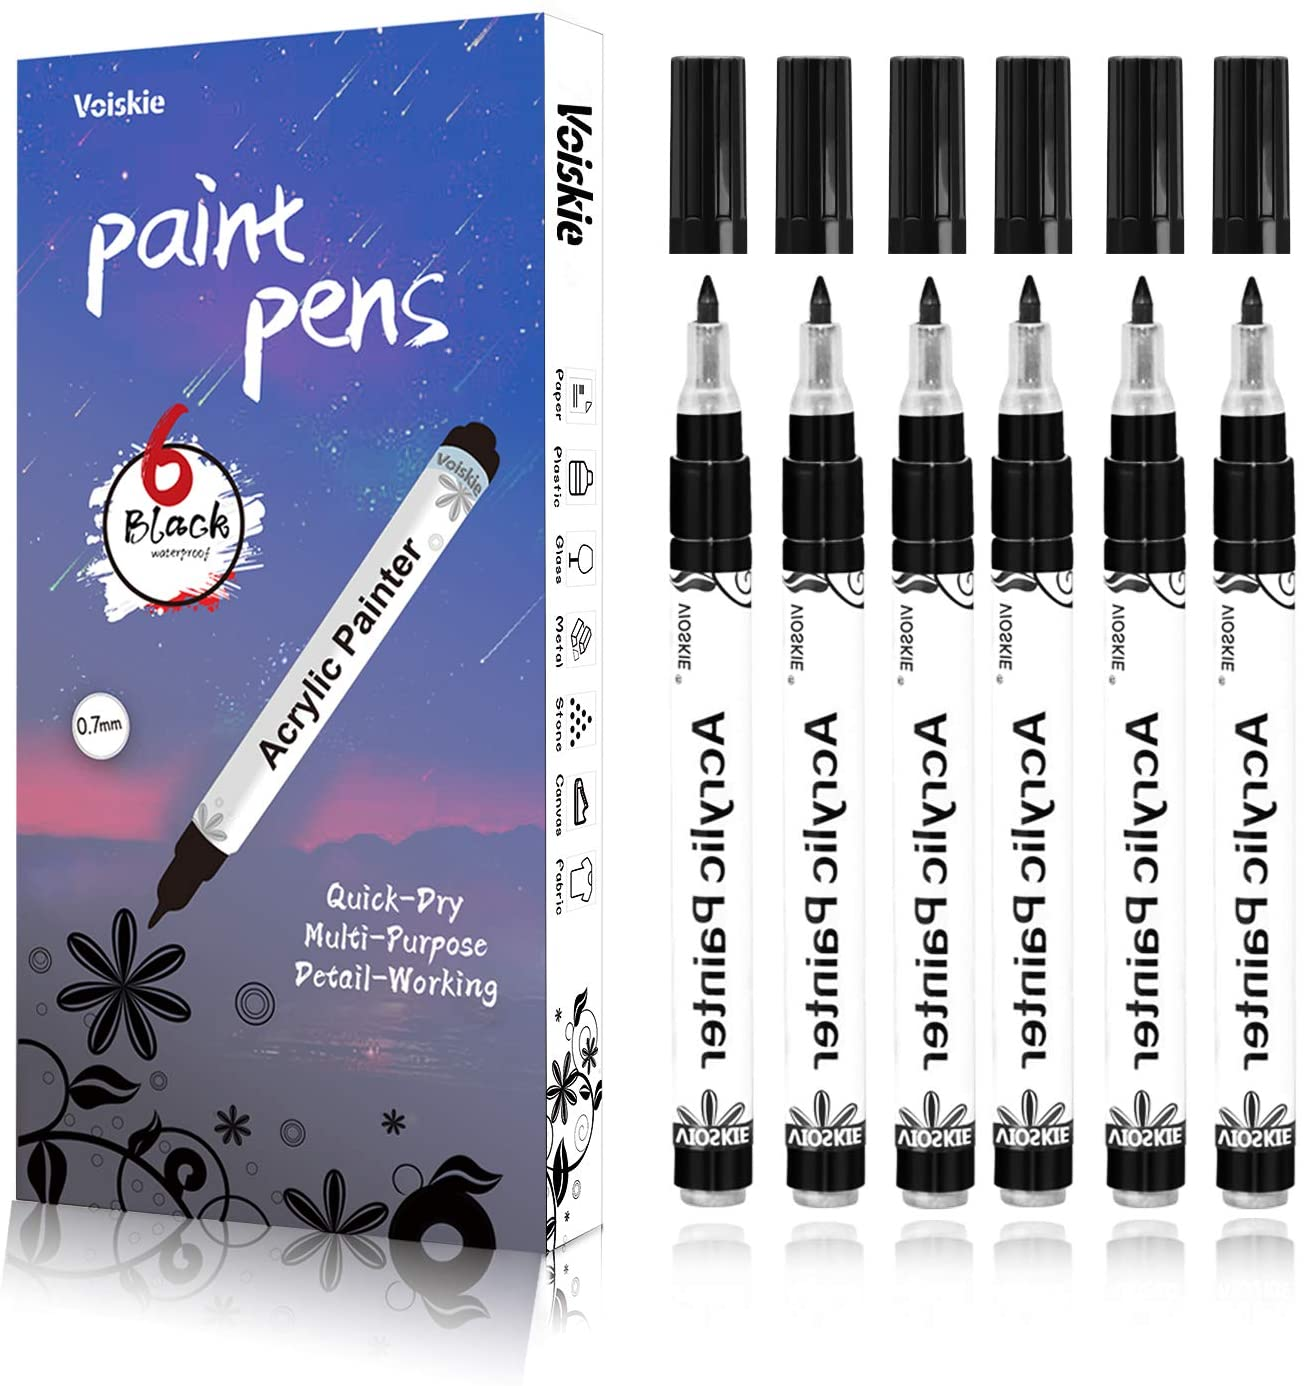 Voiskie white acrylic paint pens (6 pack) variety pack - extra fine 0.7mm & medium  tip